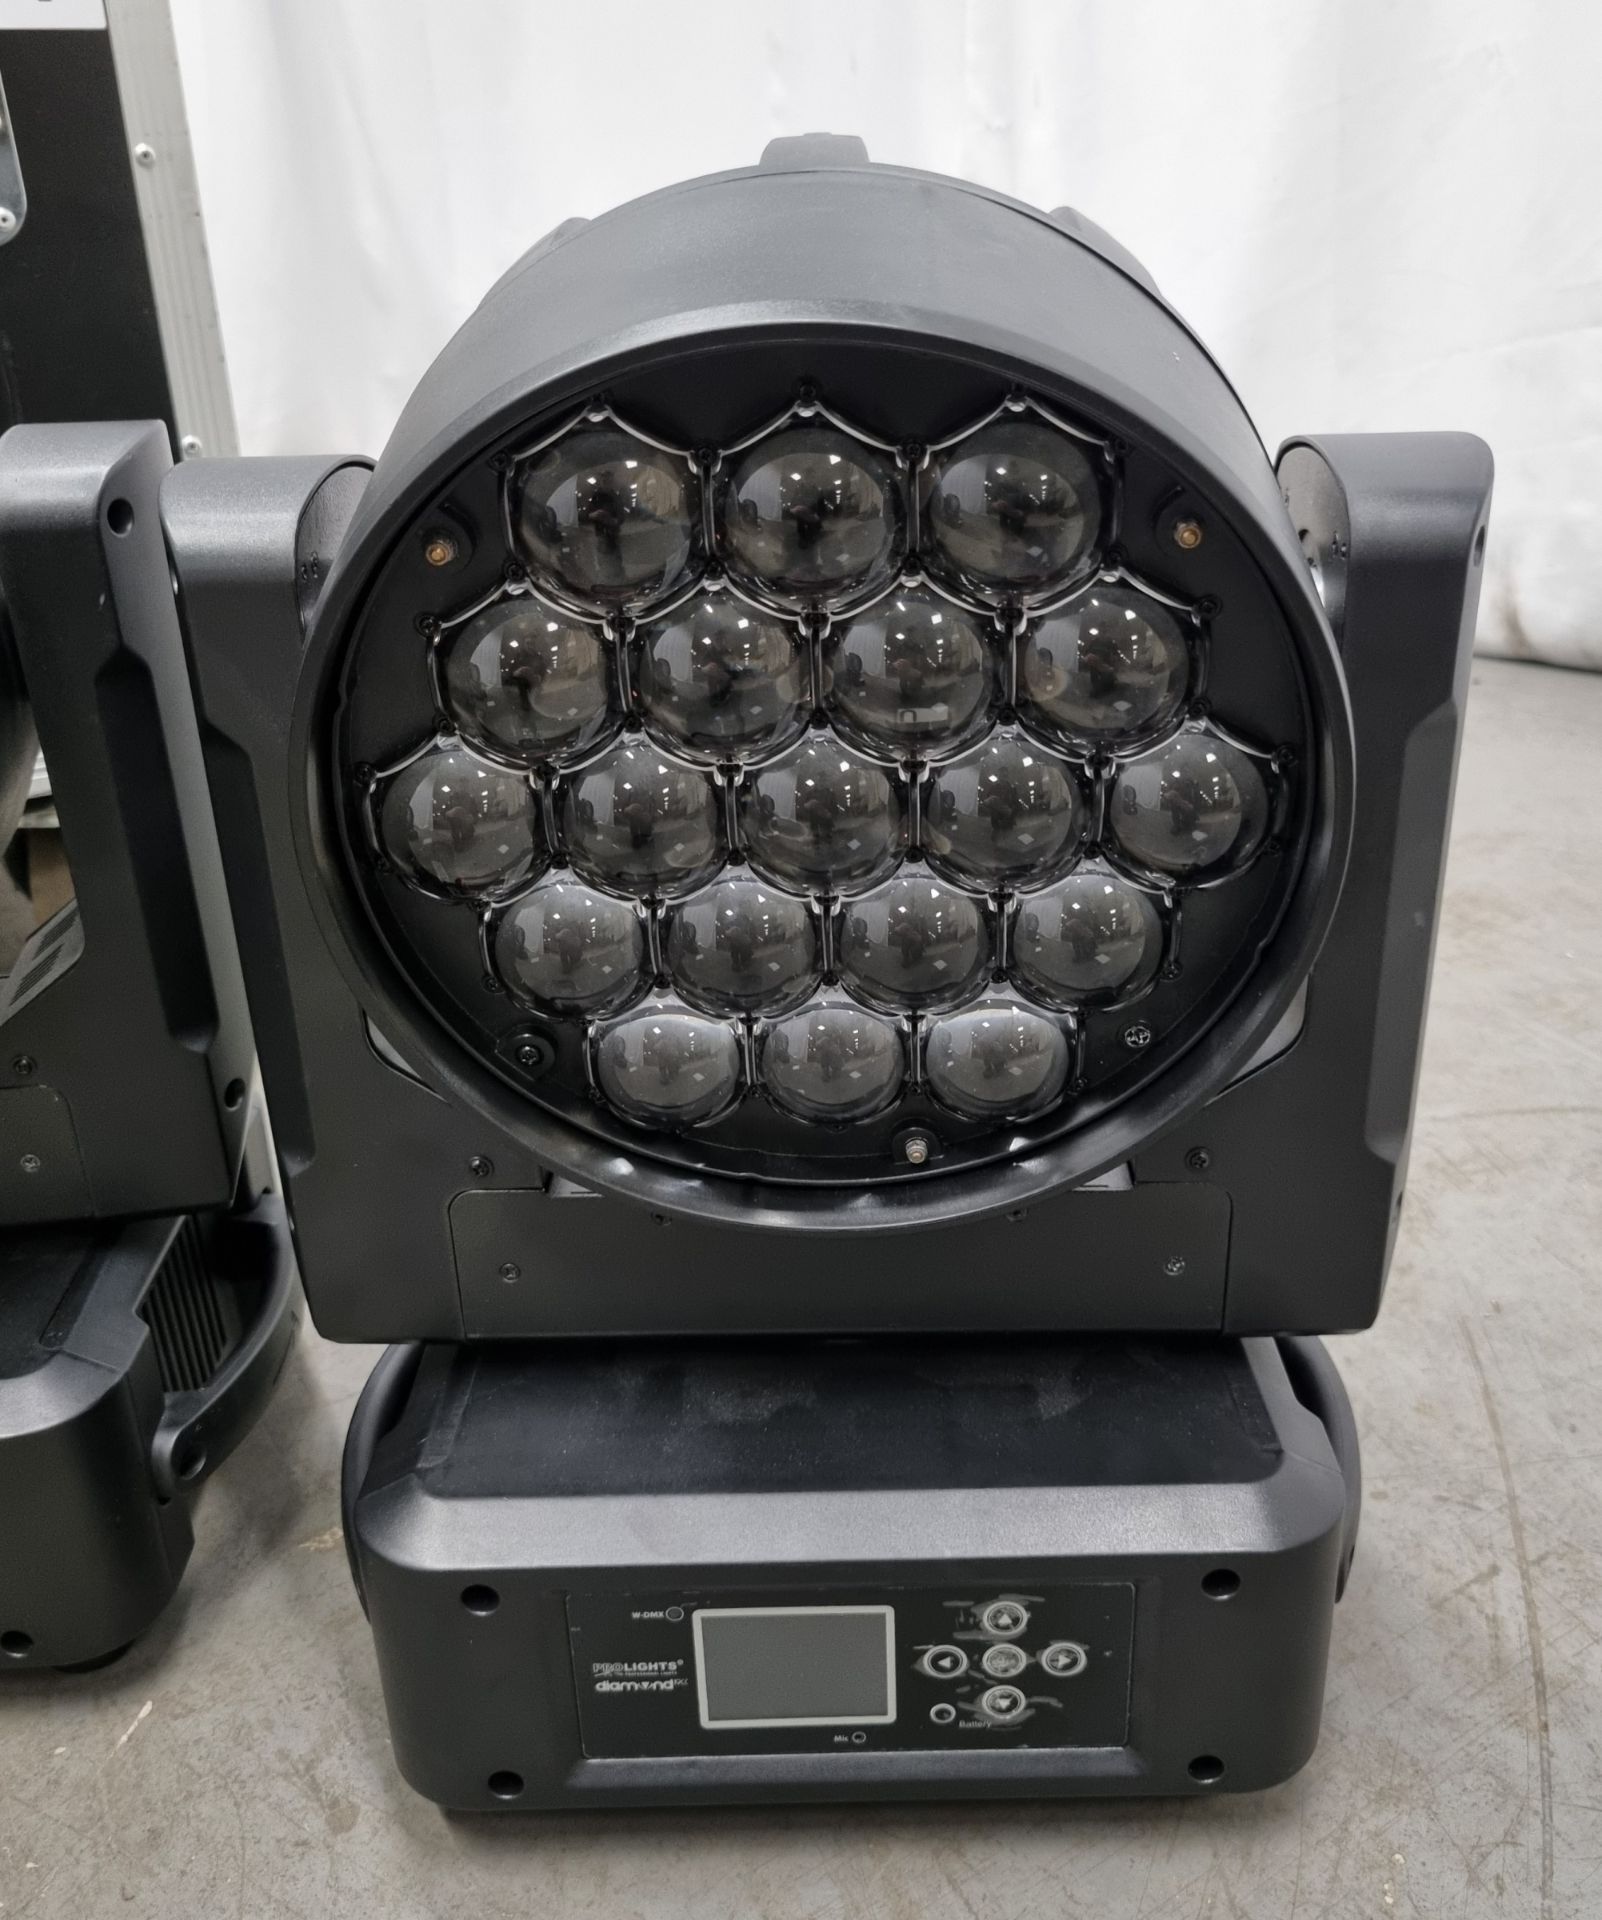 4x Prolights Diamond 19CC 19x15W moving LED wash lights with flight case - Image 3 of 12